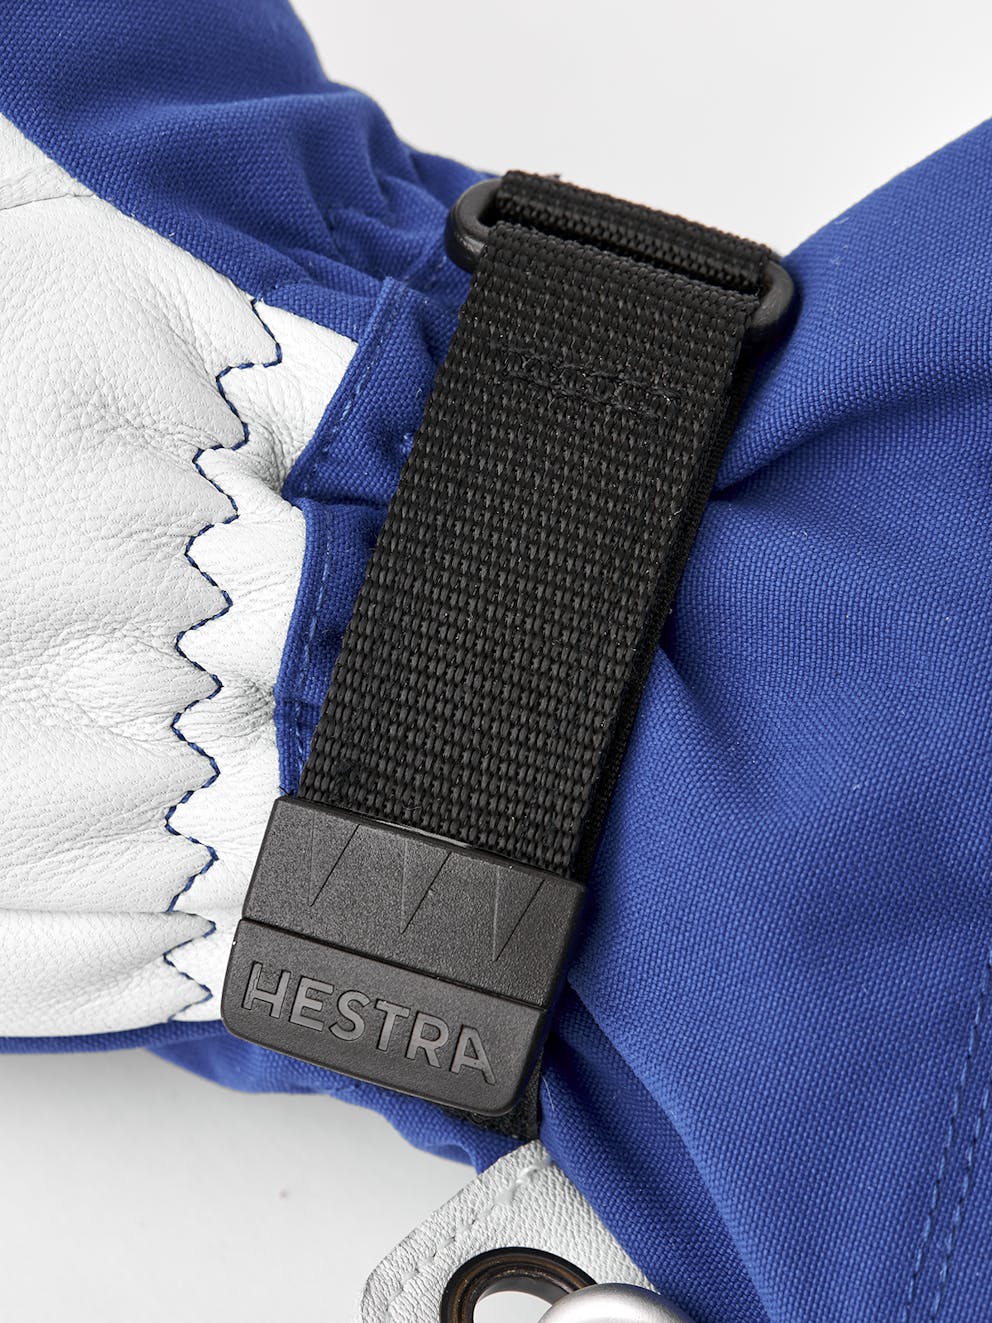 Army Leather Heli Ski - Royal blue | Hestra Gloves | Handschuhe